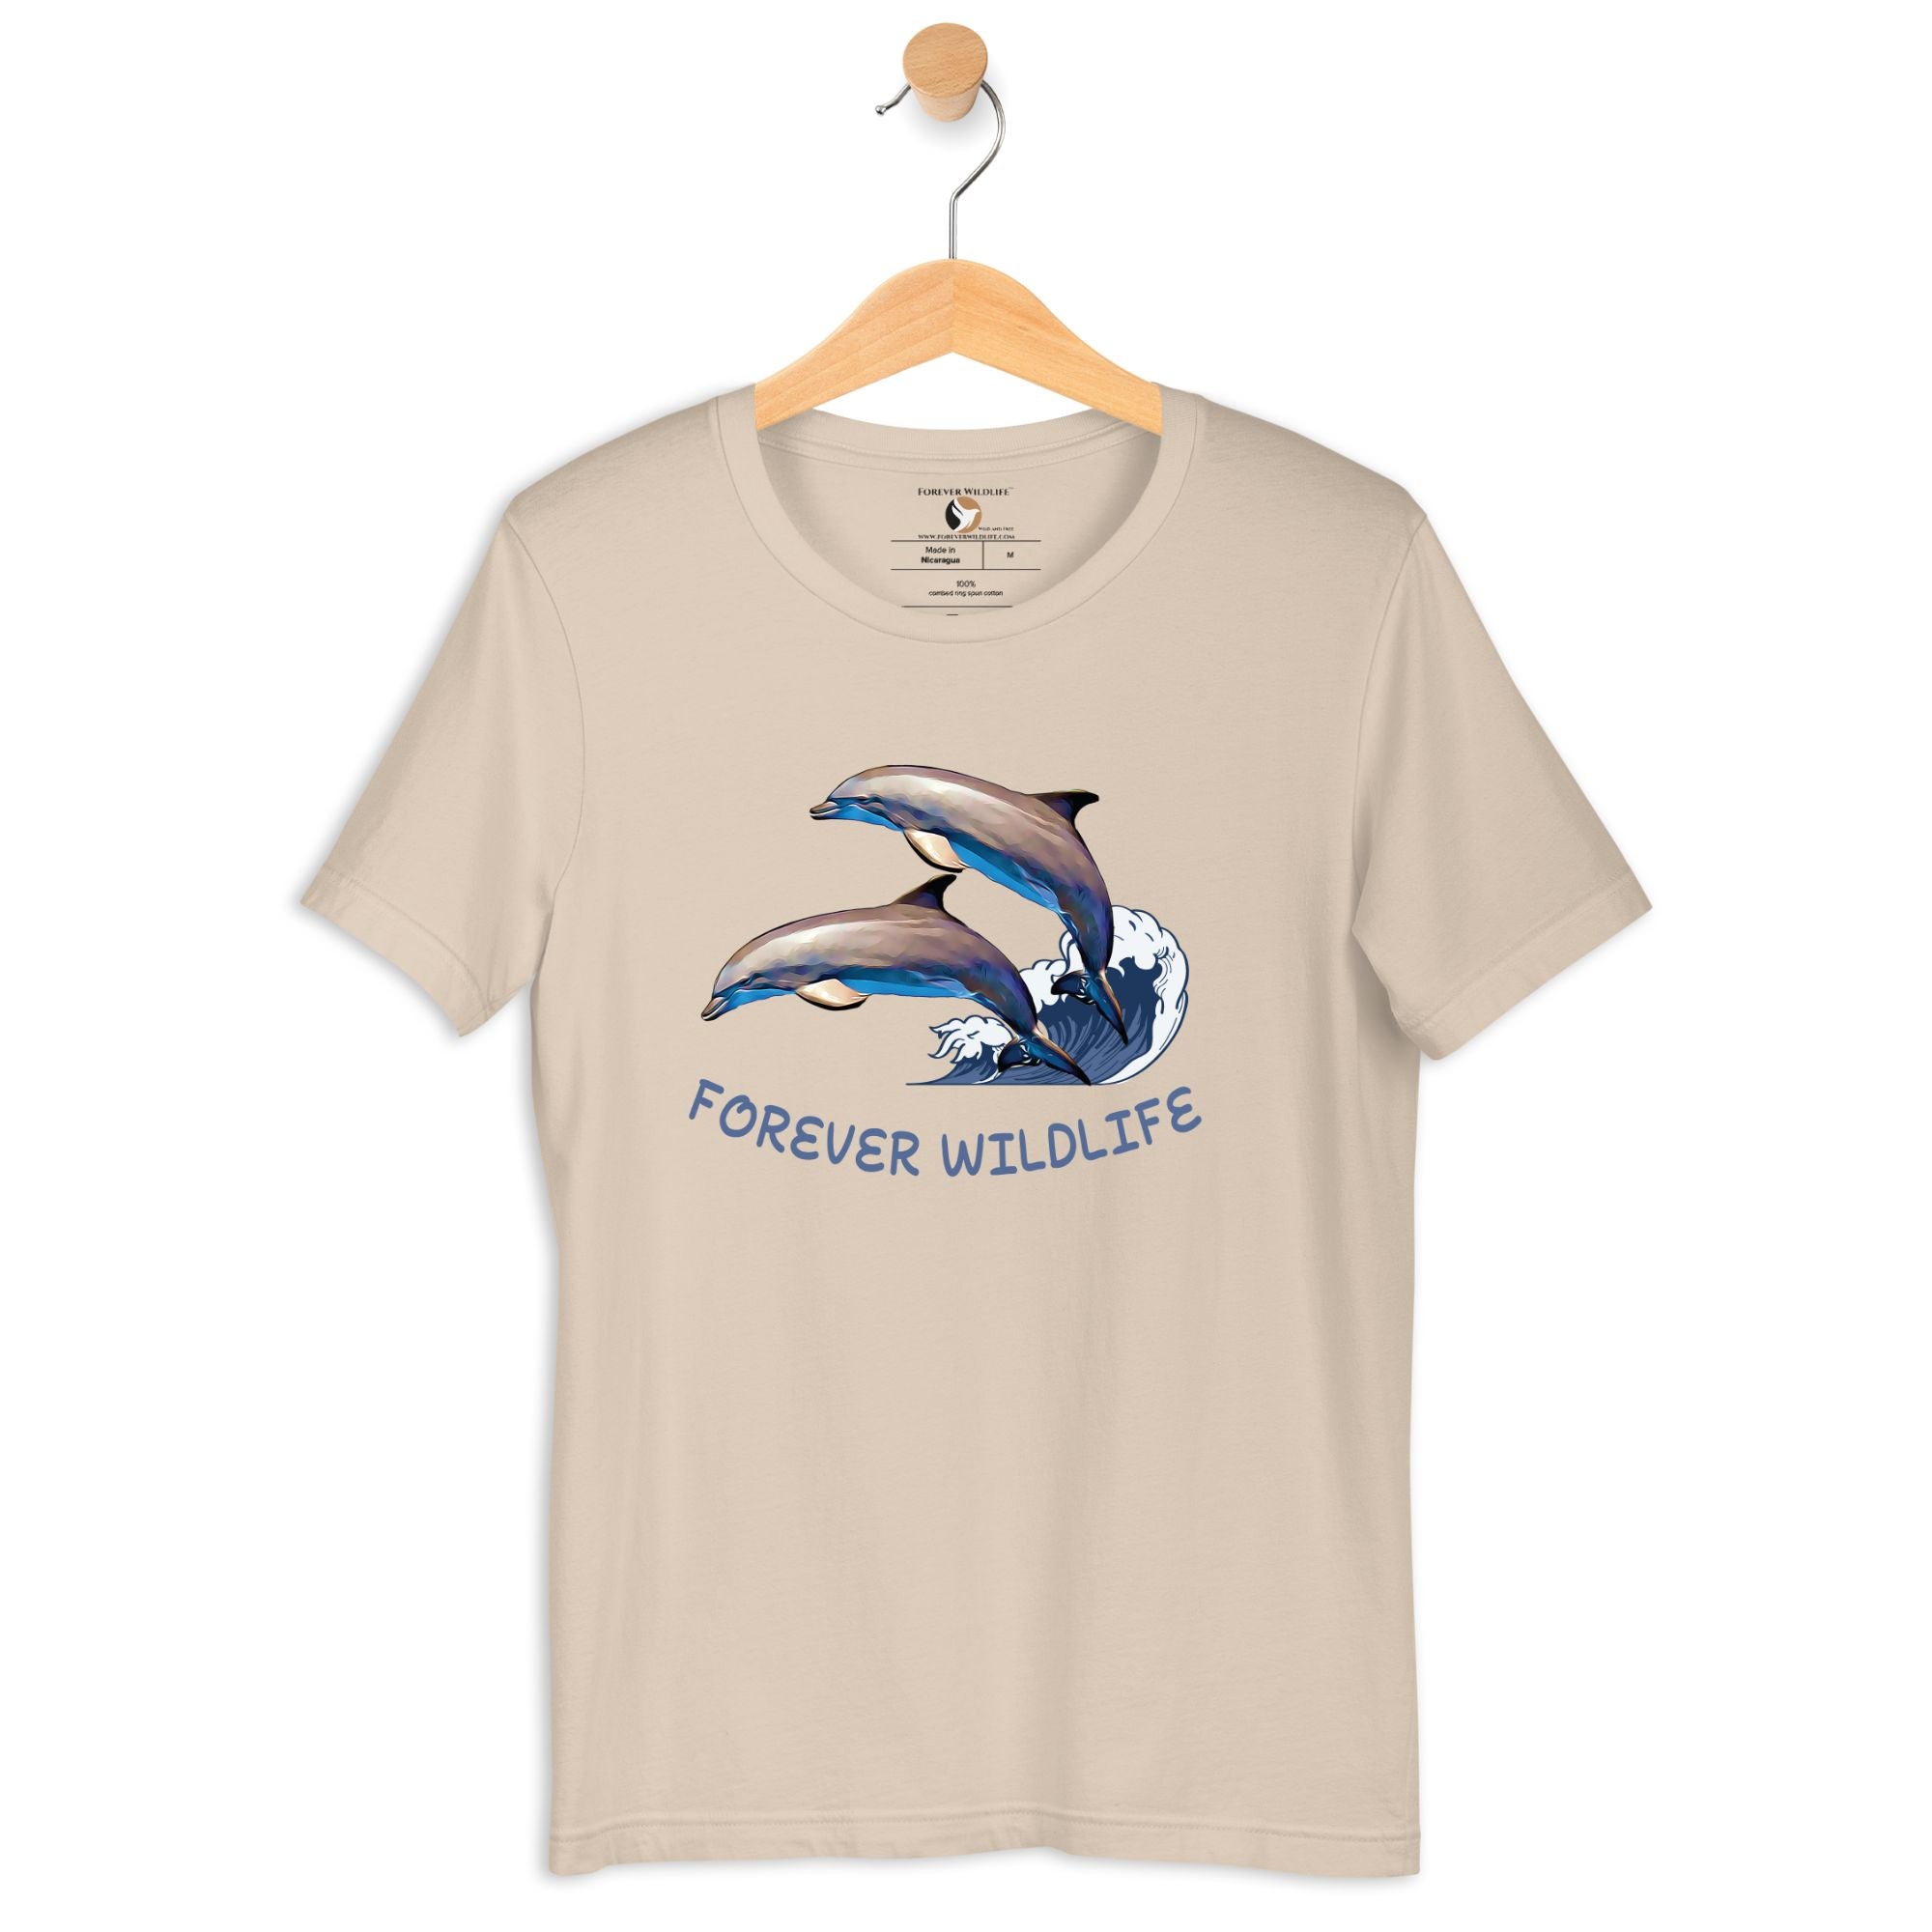 Dolphin T-Shirt in Soft Cream – Premium Wildlife T-Shirt Design, Wildlife Clothing & Apparel from Forever Wildlife